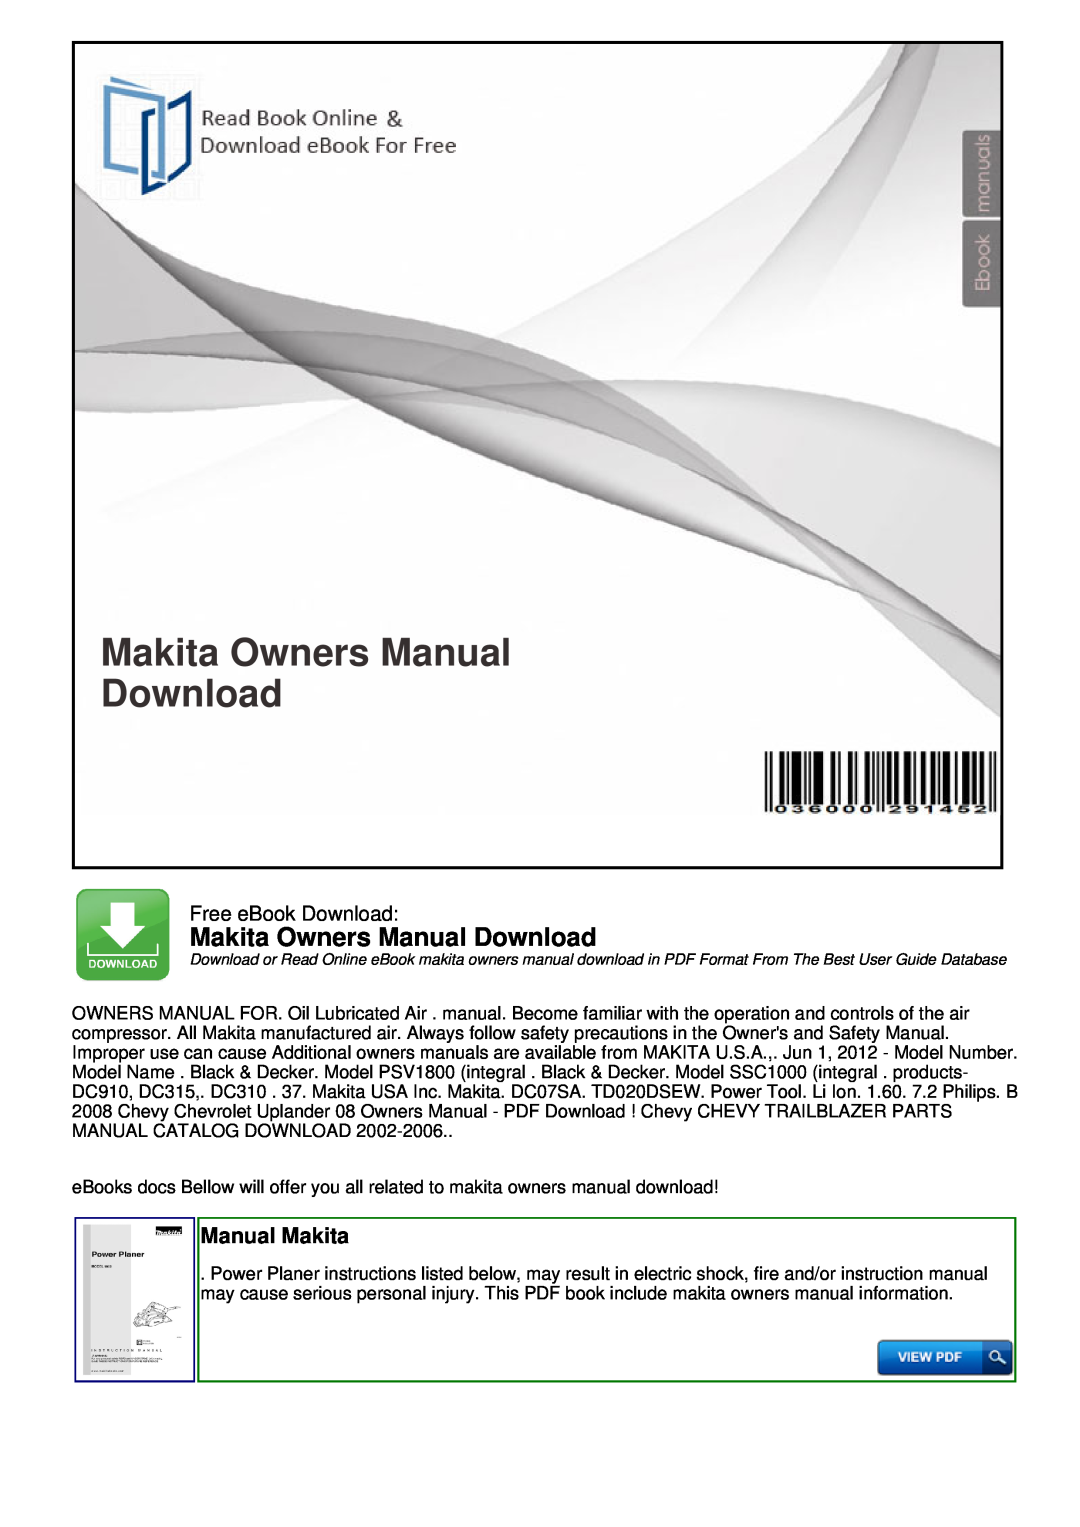 Makita TD020DSEW, SSC1000, DC07SA, DC910 owner manual Manual Makita, Makita Owners Manual Download, Free eBook Download 